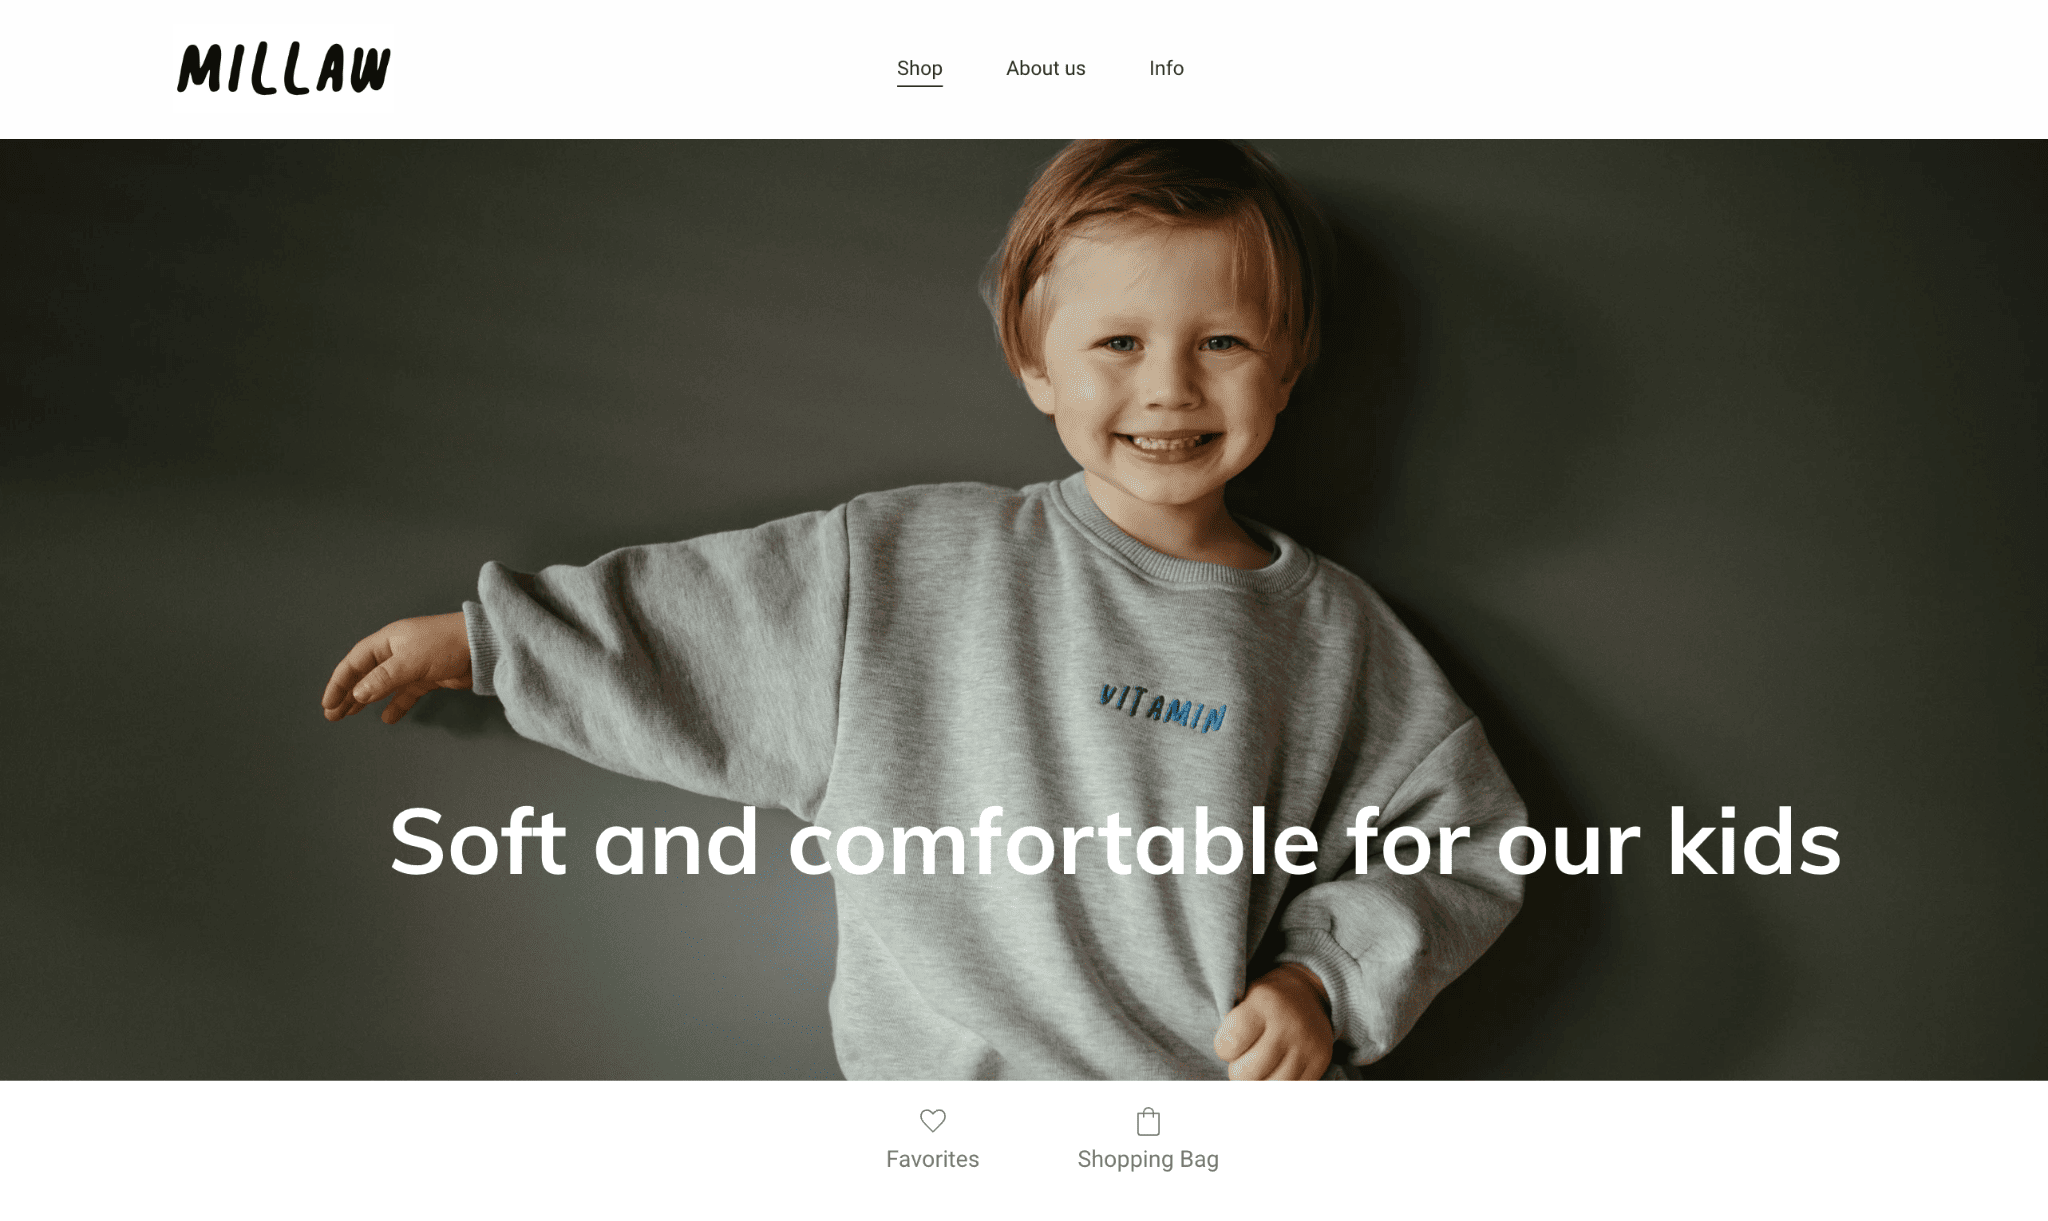 zyro website example - millaw kids